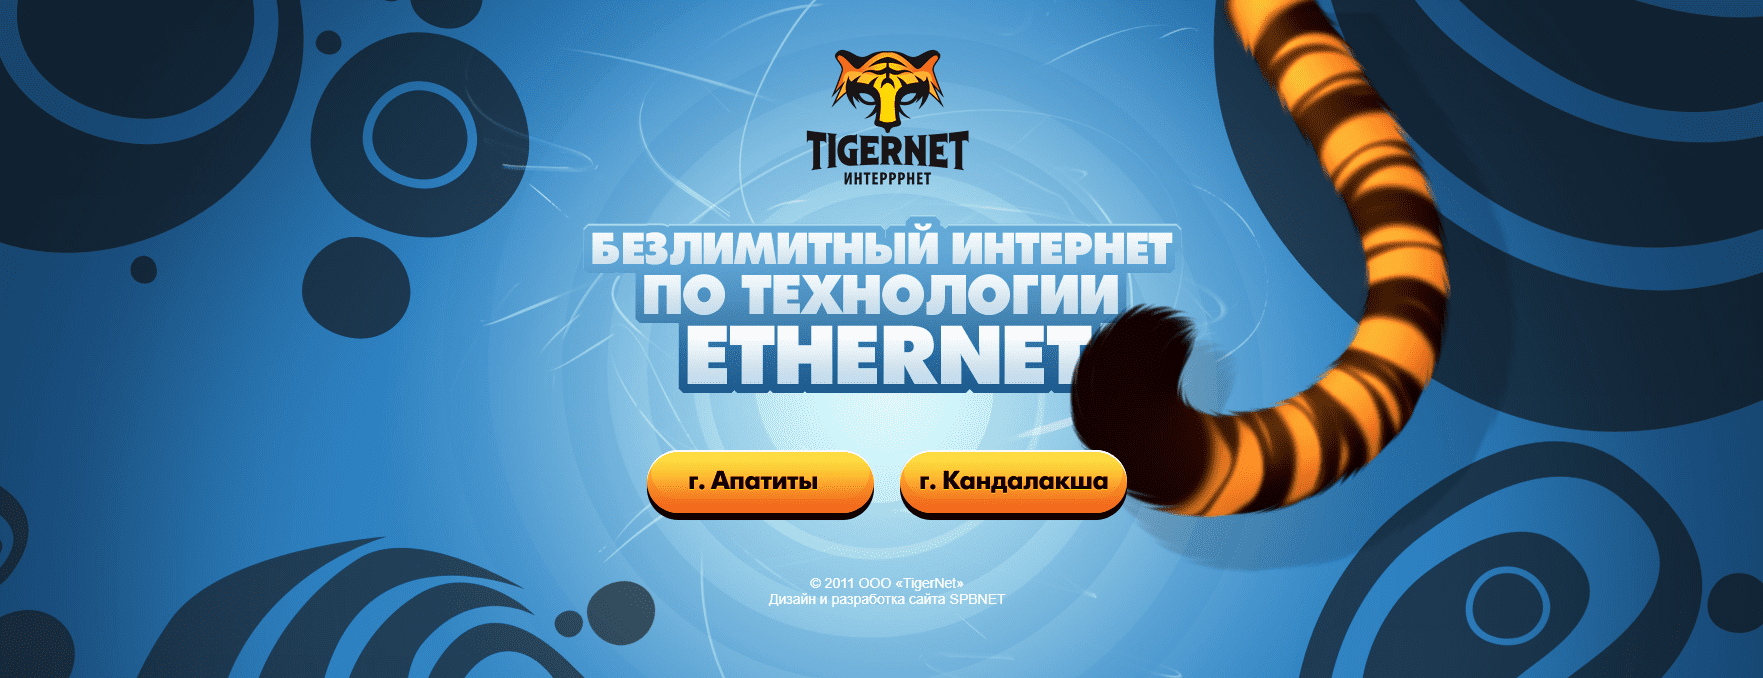 Тайгернет (tigernet.ru)